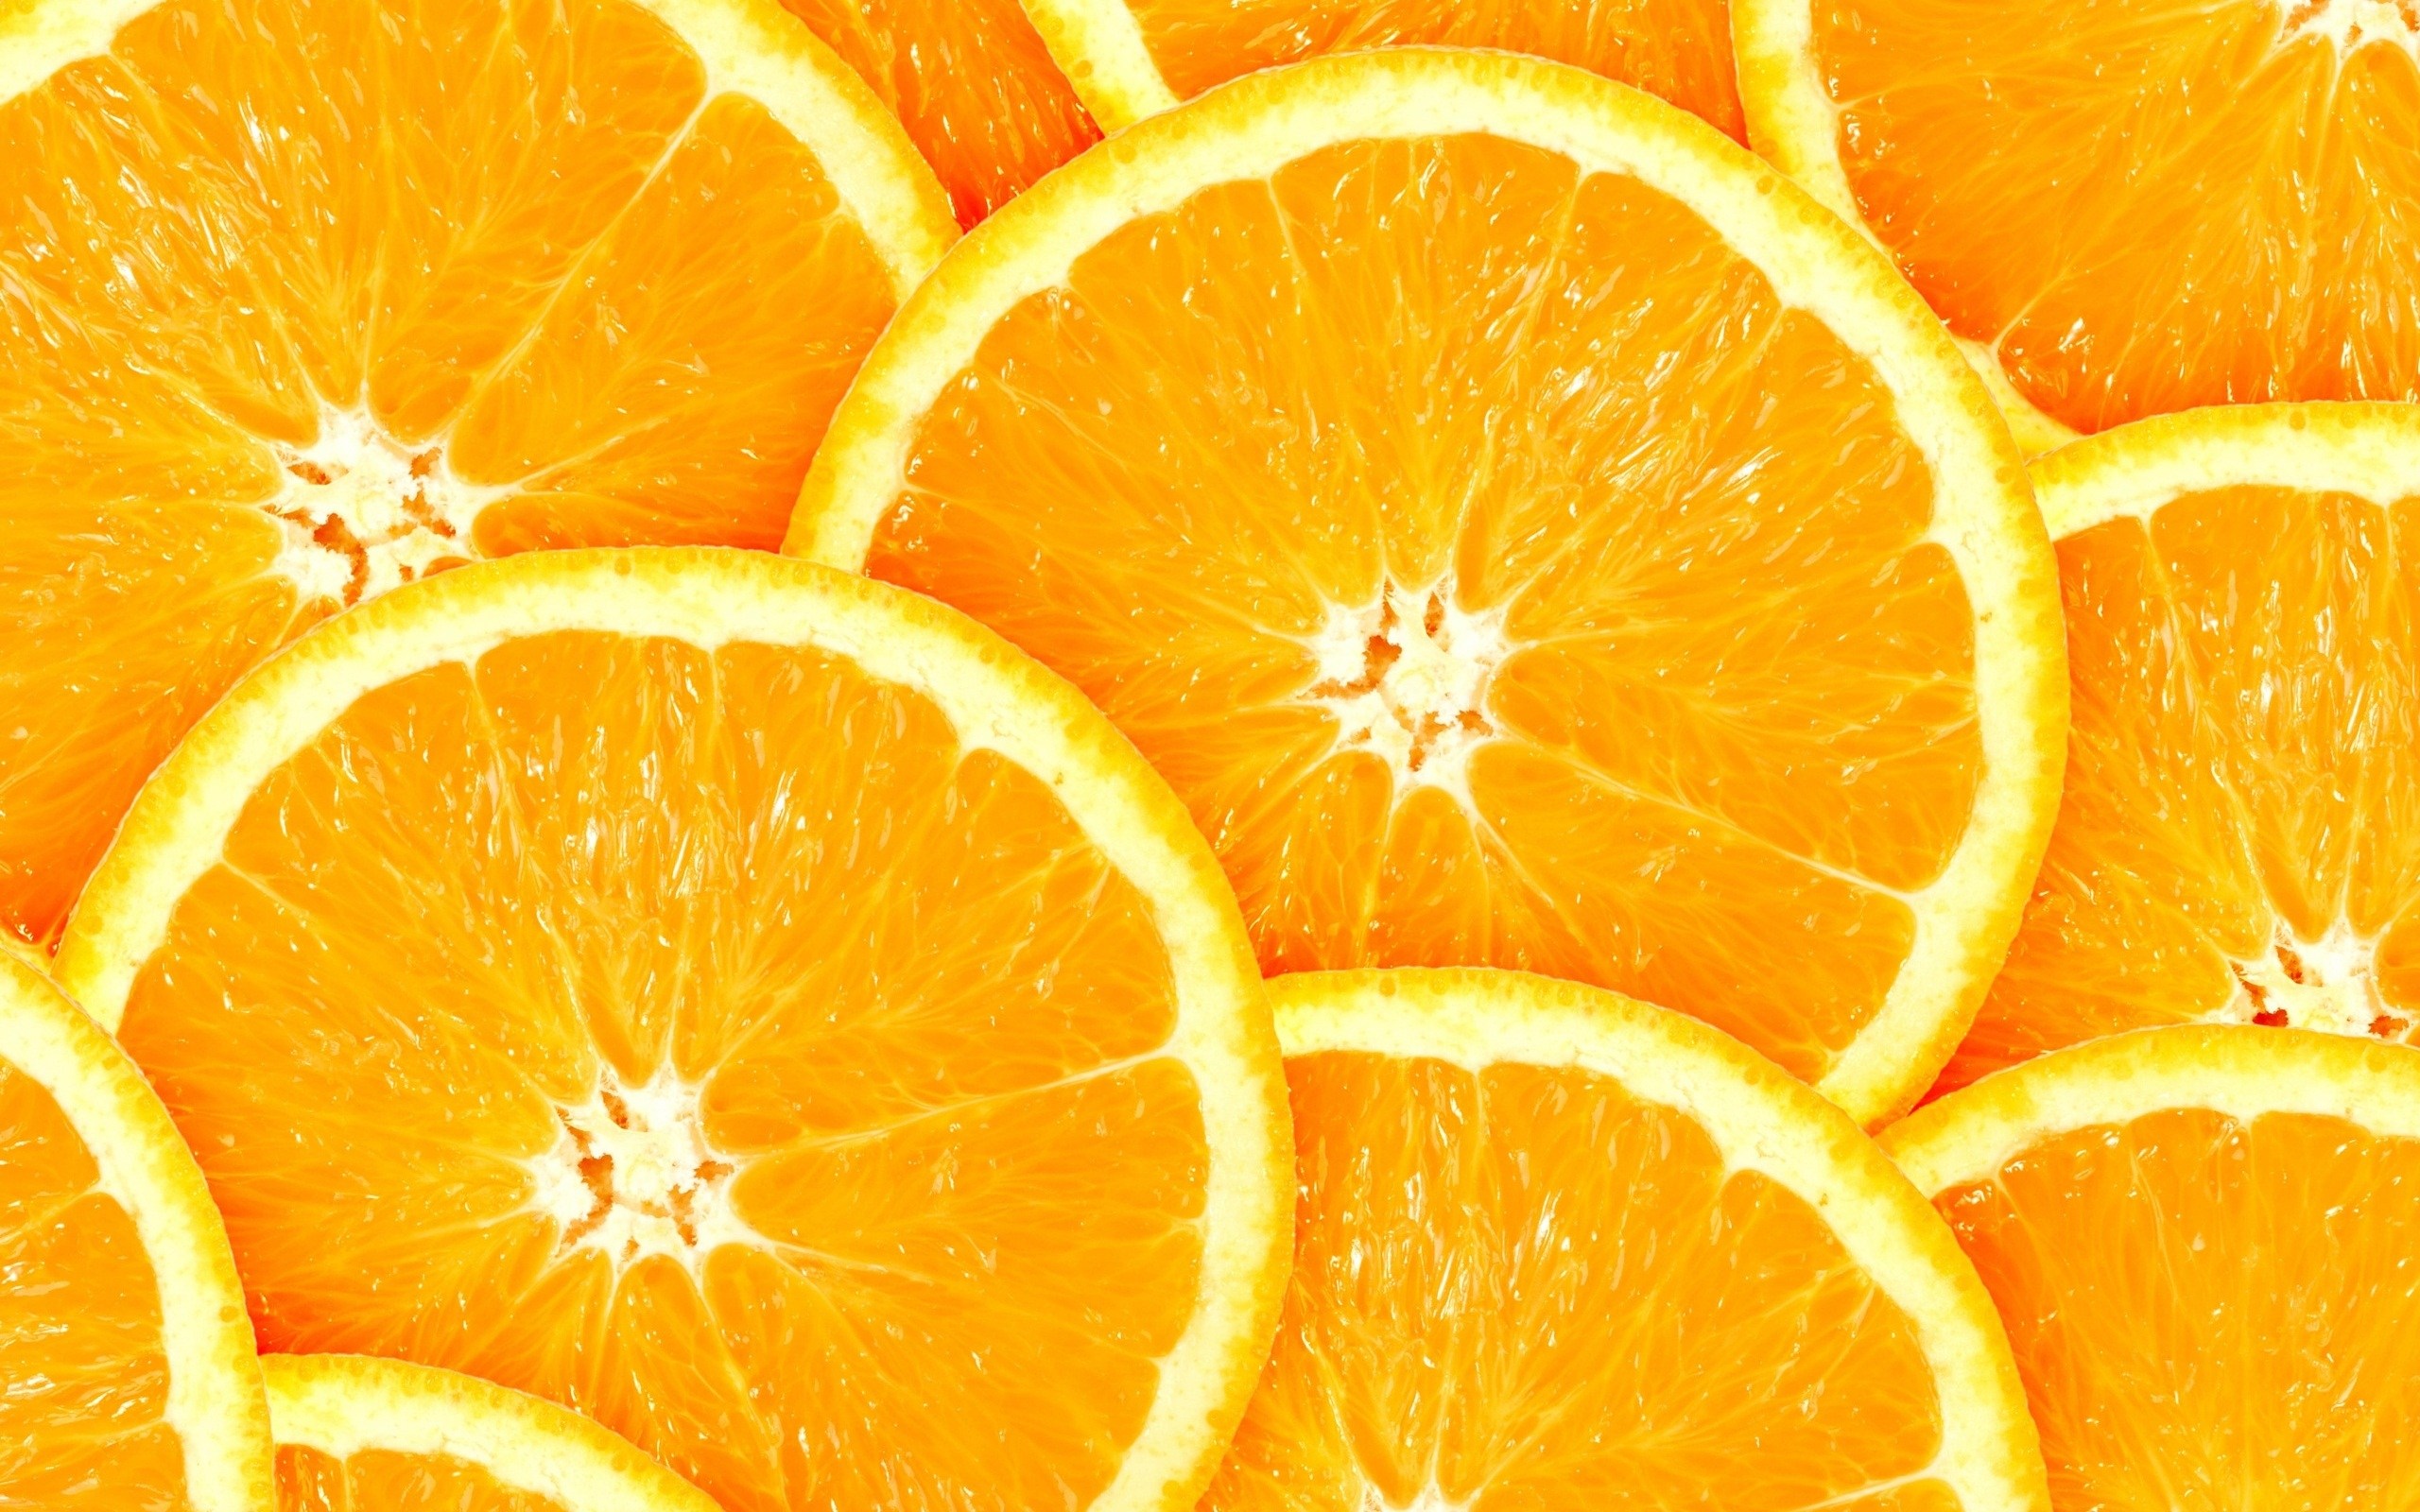 Oranges Wallpaper: Pix for Gt Oranges Wallpaper Hd 2560x1600px